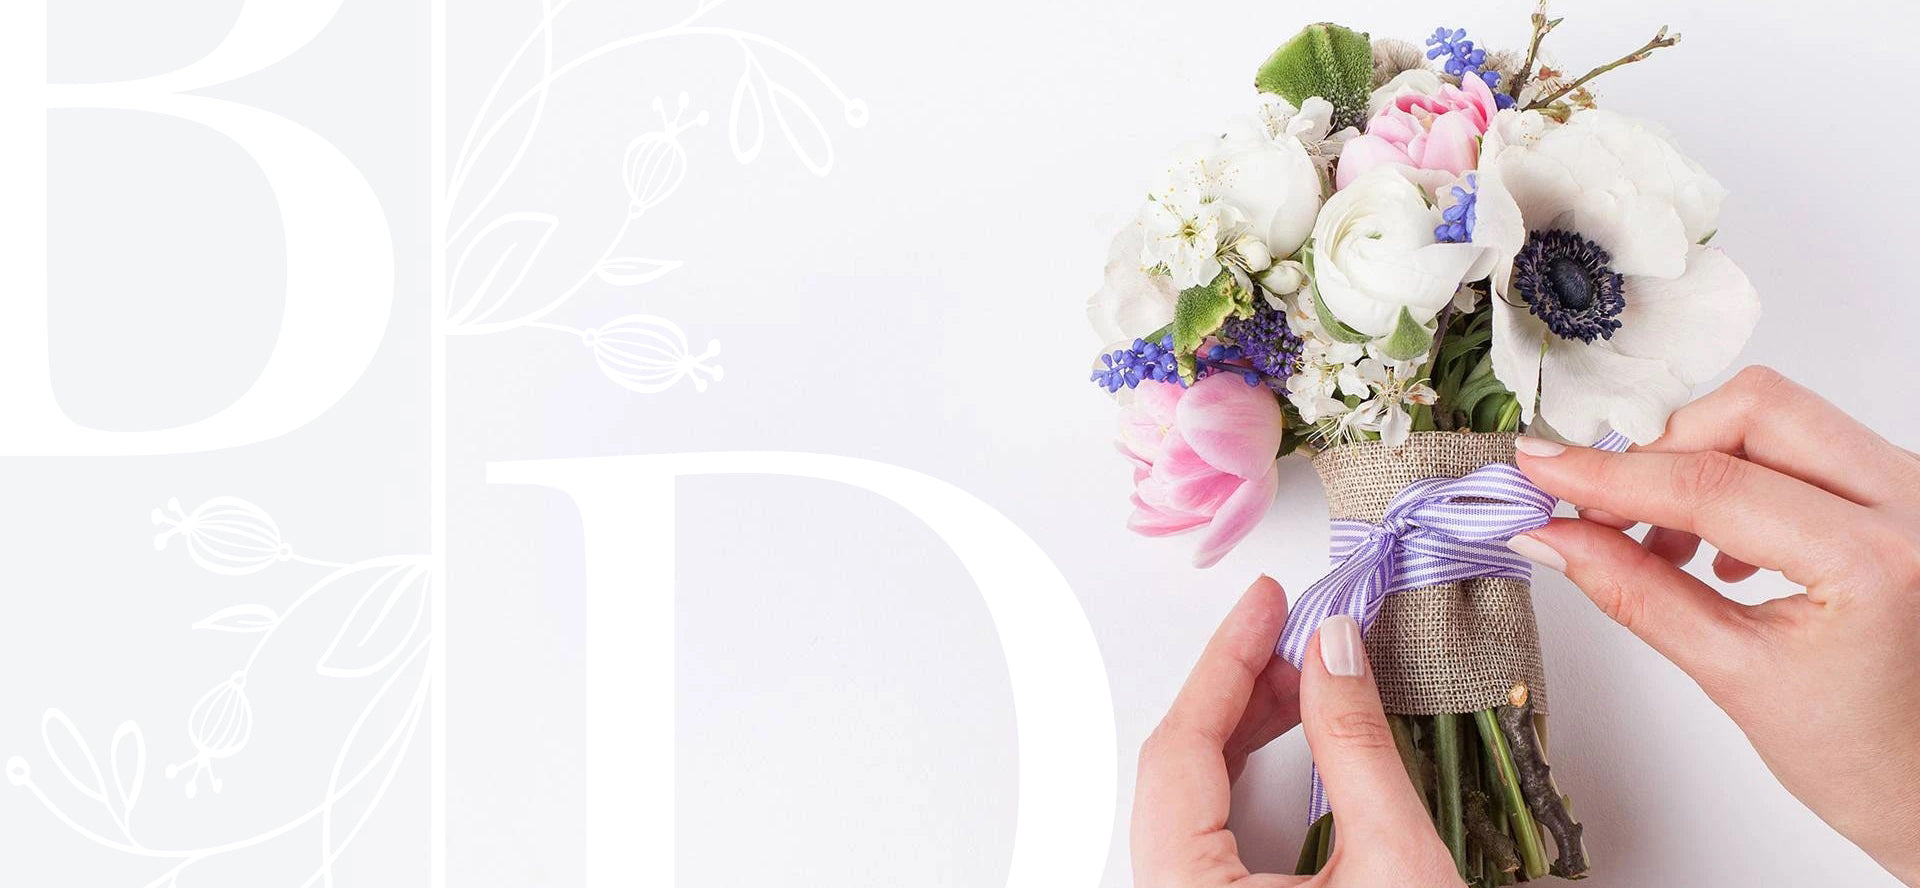 Cranberry Design Master Floral Spray Paint | Flower Moxie | DIY Wedding